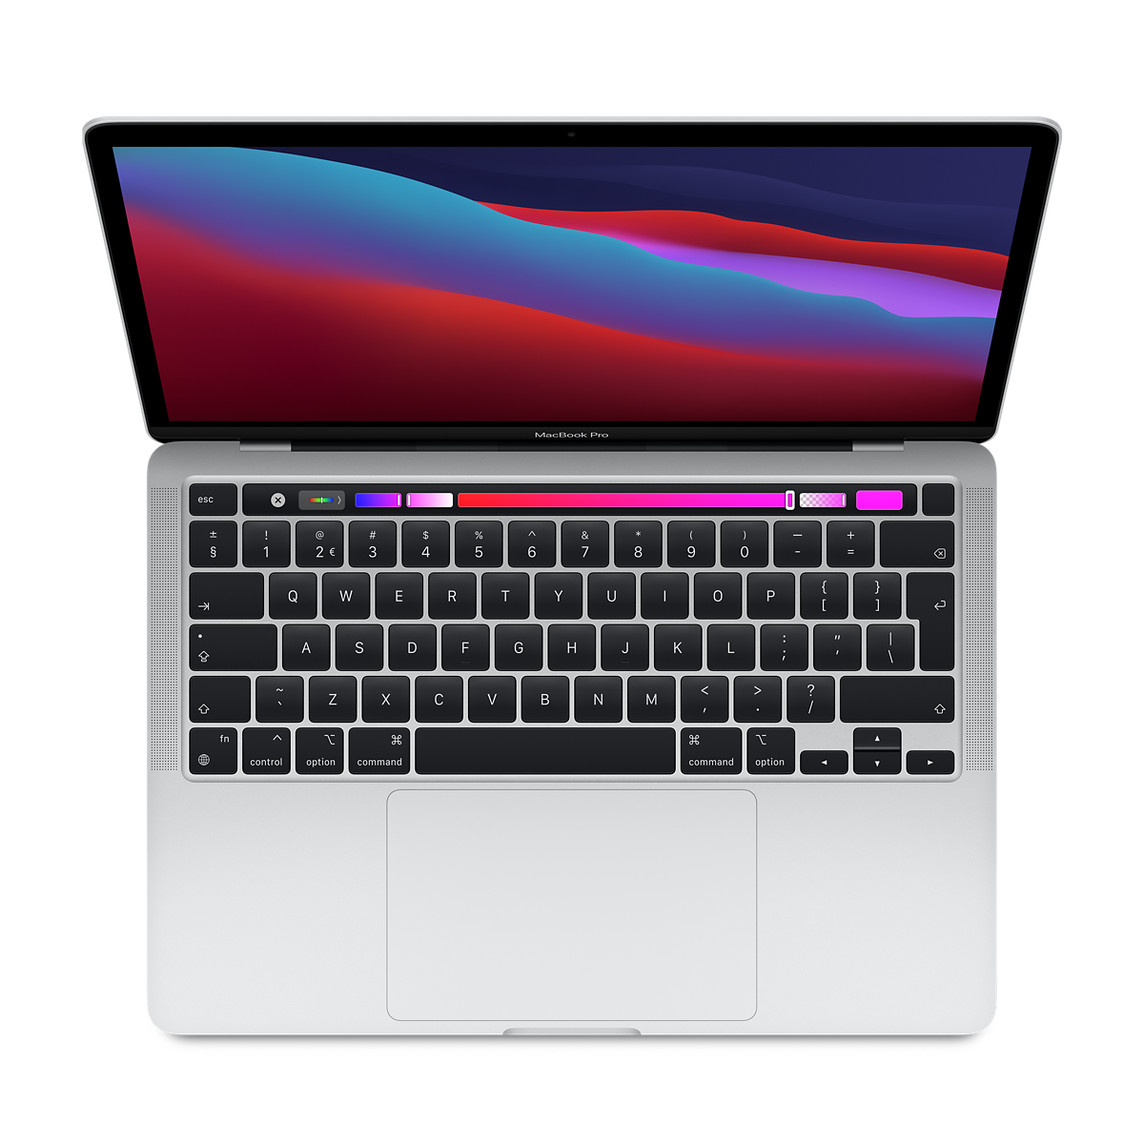 Opengeklapte MacBook Pro, display, toetsenbord met rij functietoetsen van volledige hoogte en ronde Touch ID-knop, trackpad, zilverkleurig